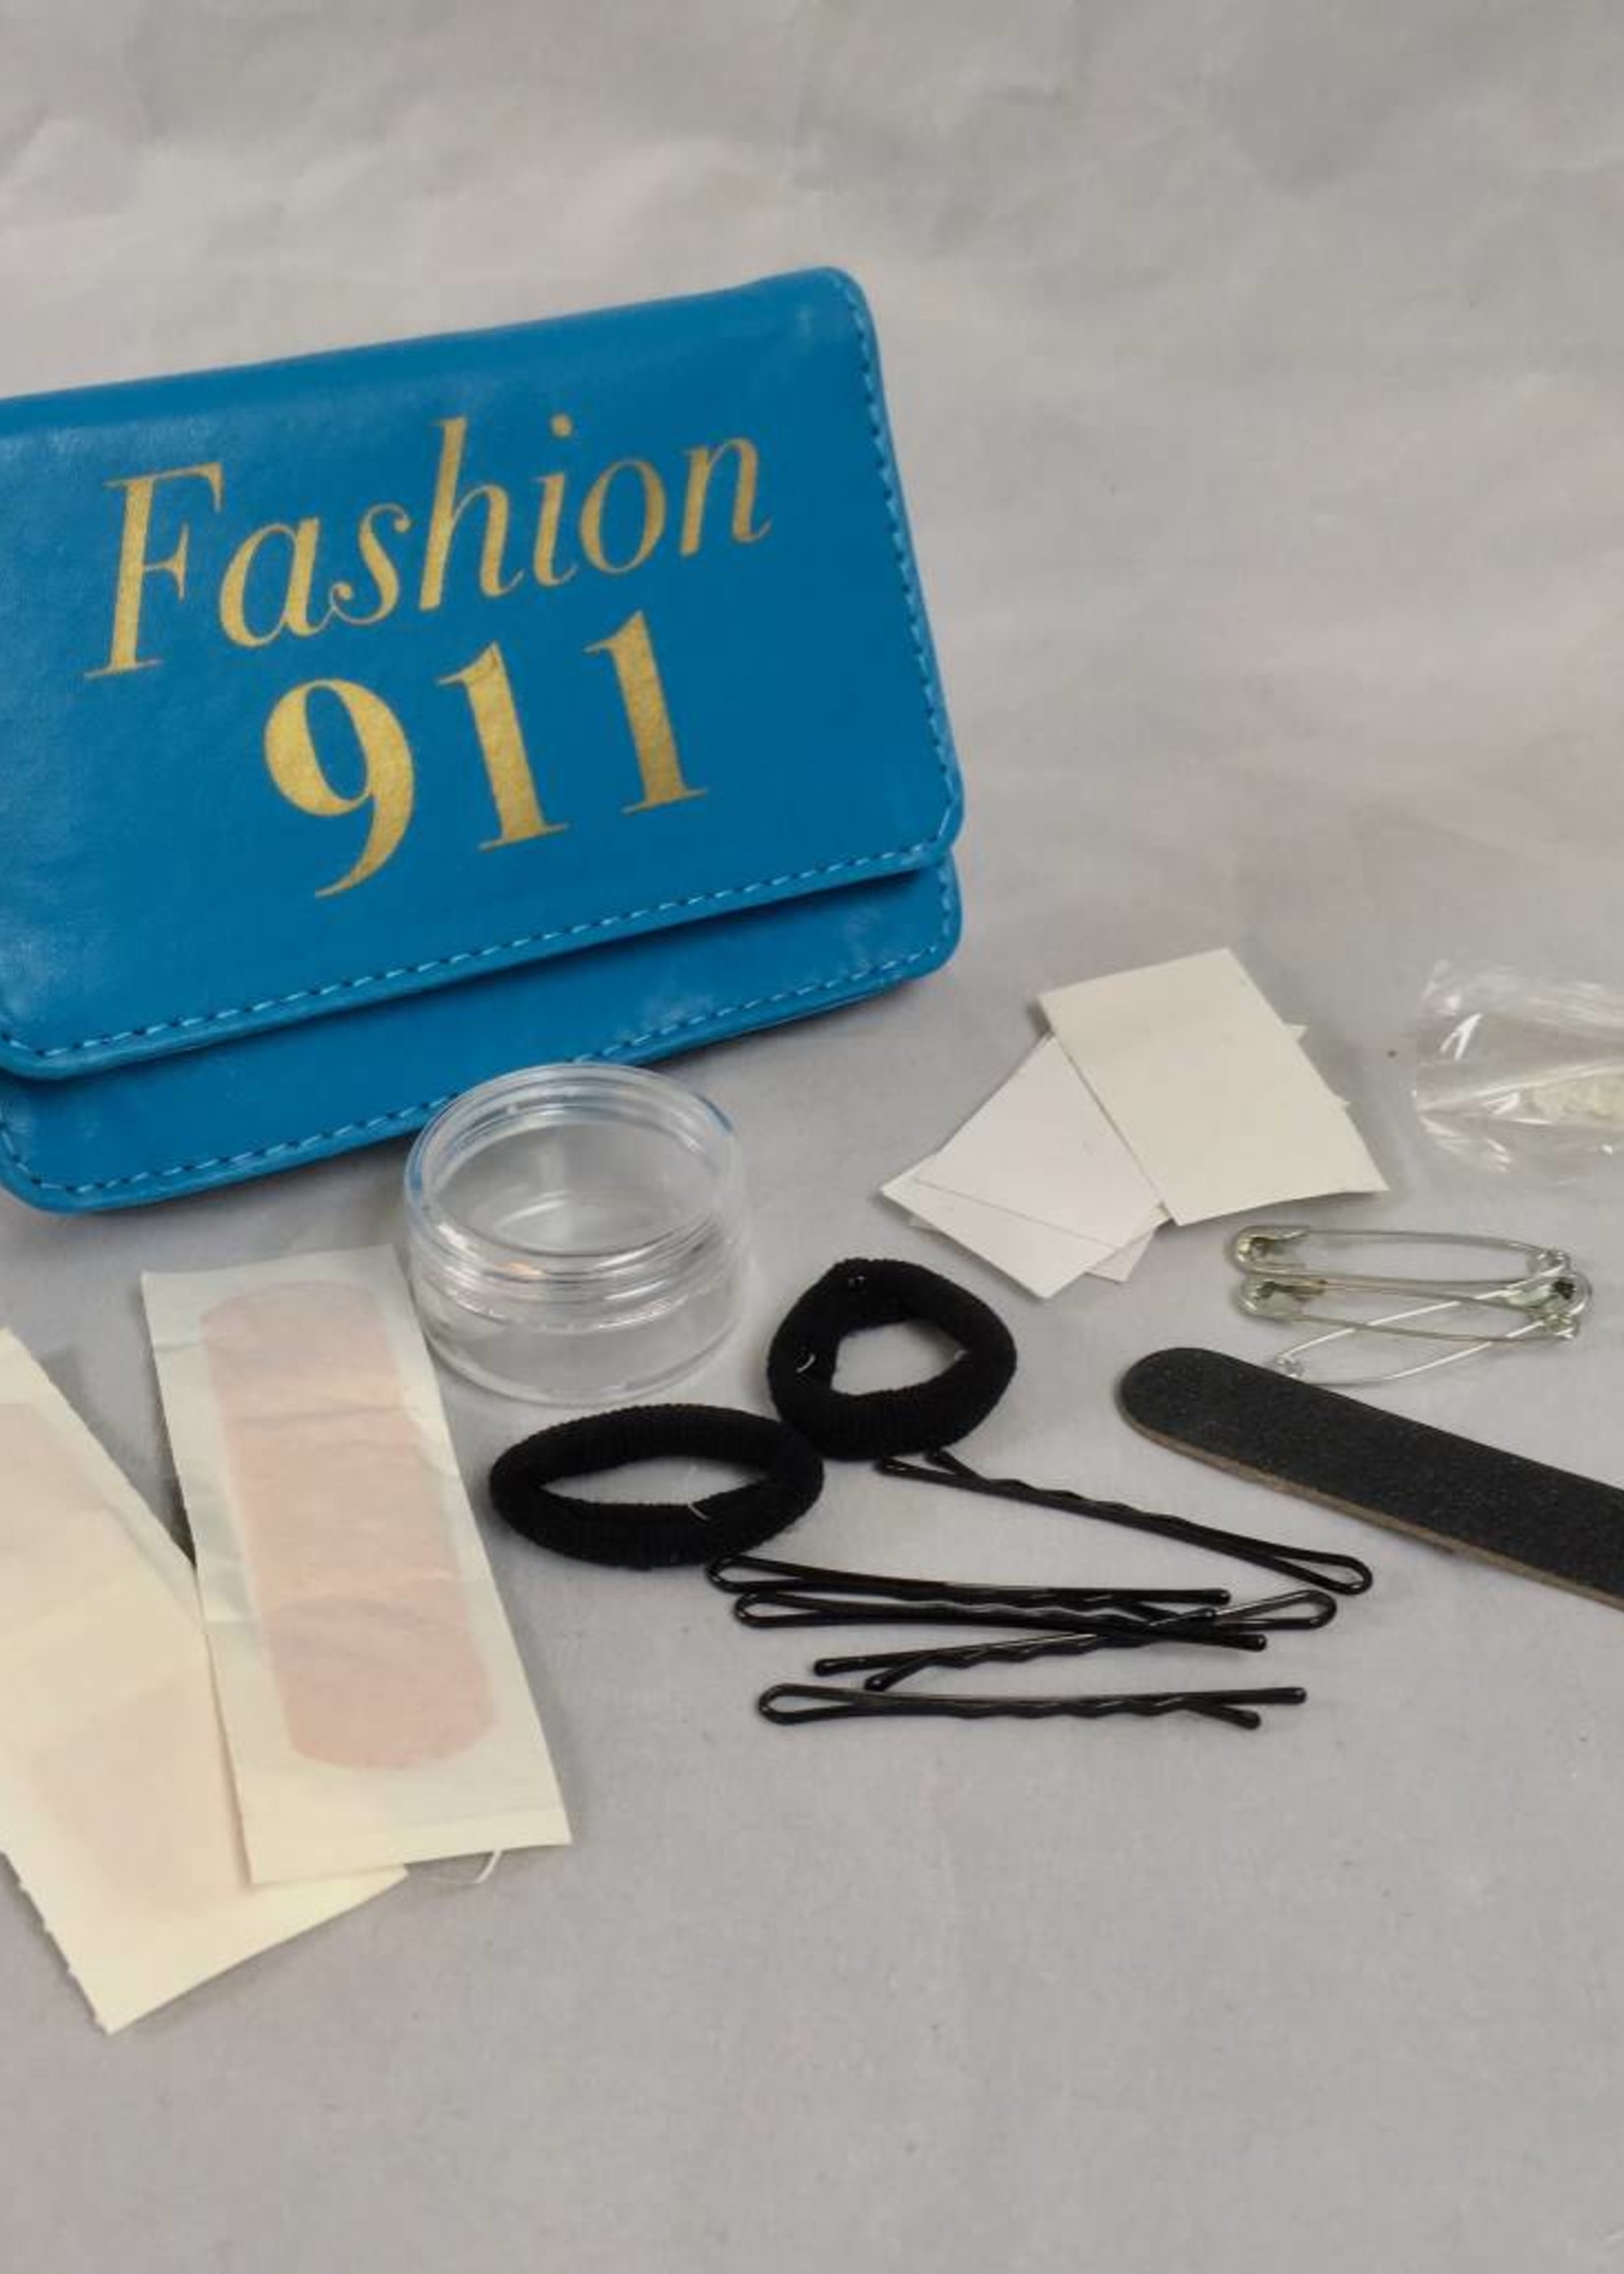 CR Gibson Fashion 911 Emergency Kit